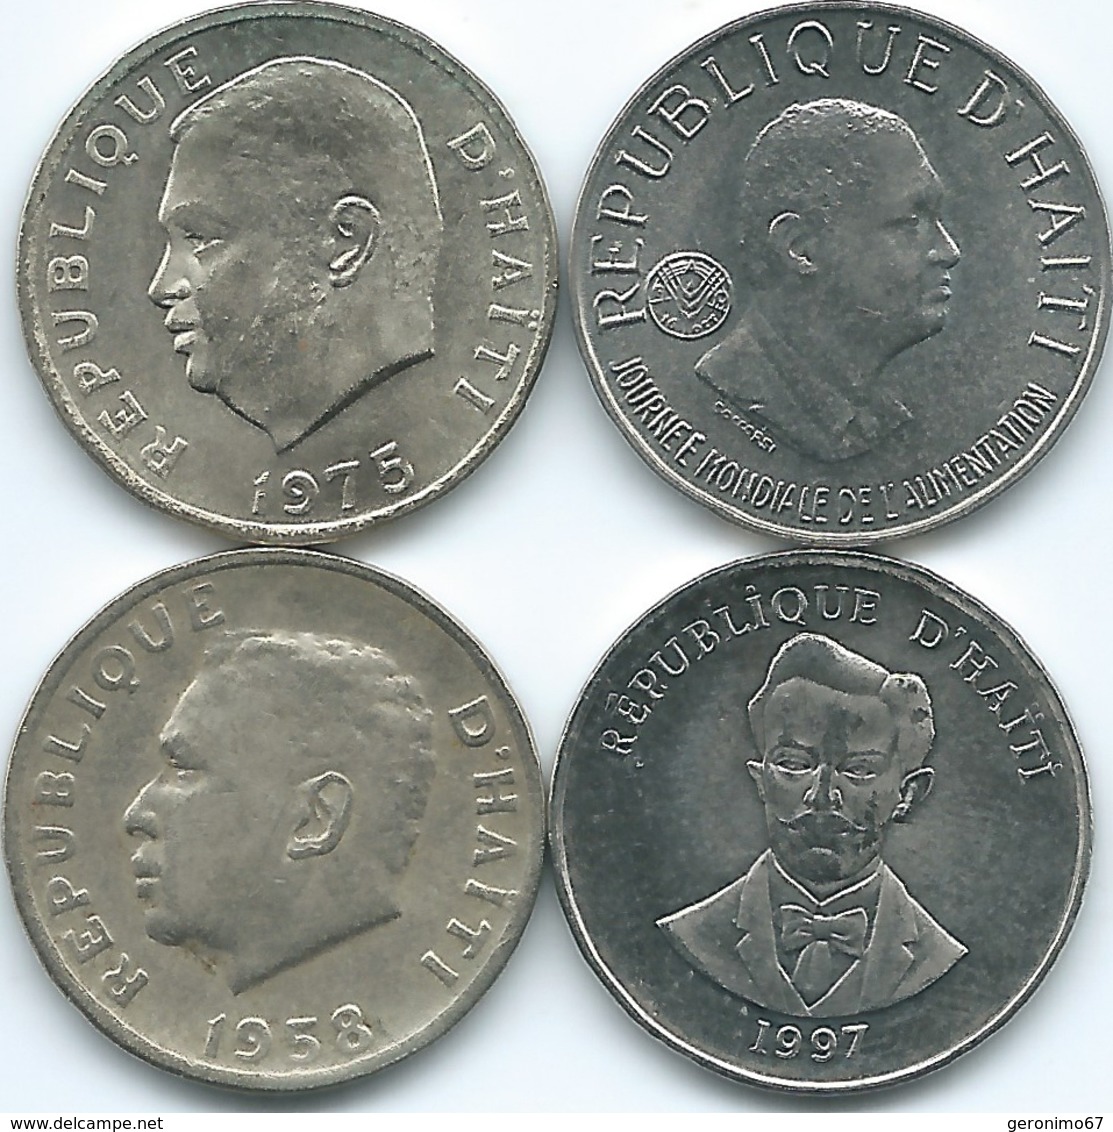 Haiti - 5 Centimes - 1958 (KM62) 1975 - FAO (KM119) 1981 - FAO (KM145) & 1997 (KM154a) - Haiti